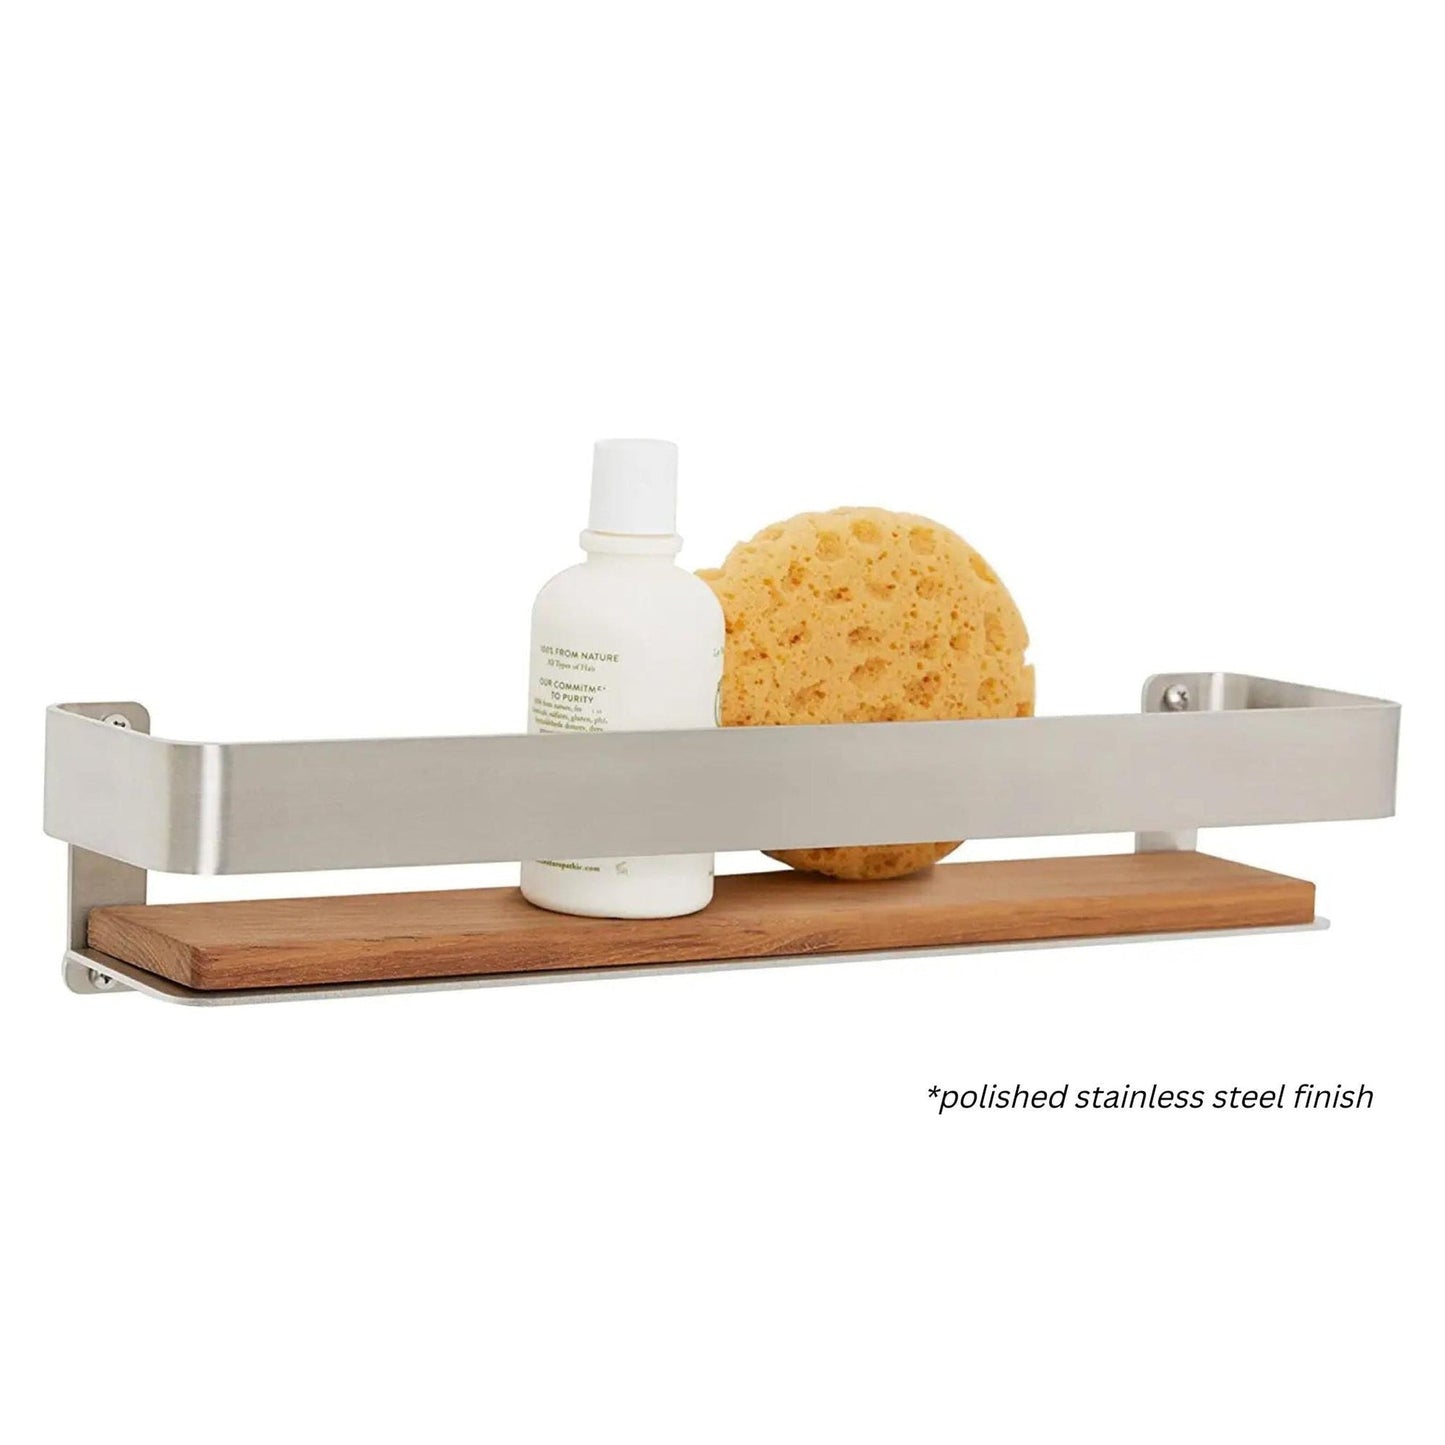 Seachrome Coronado 700 Series 18" x 4" Rectangular Shower Shelf With Rail in Almond Powder Coated Stainless Steel and Natural Teak Wood Insert